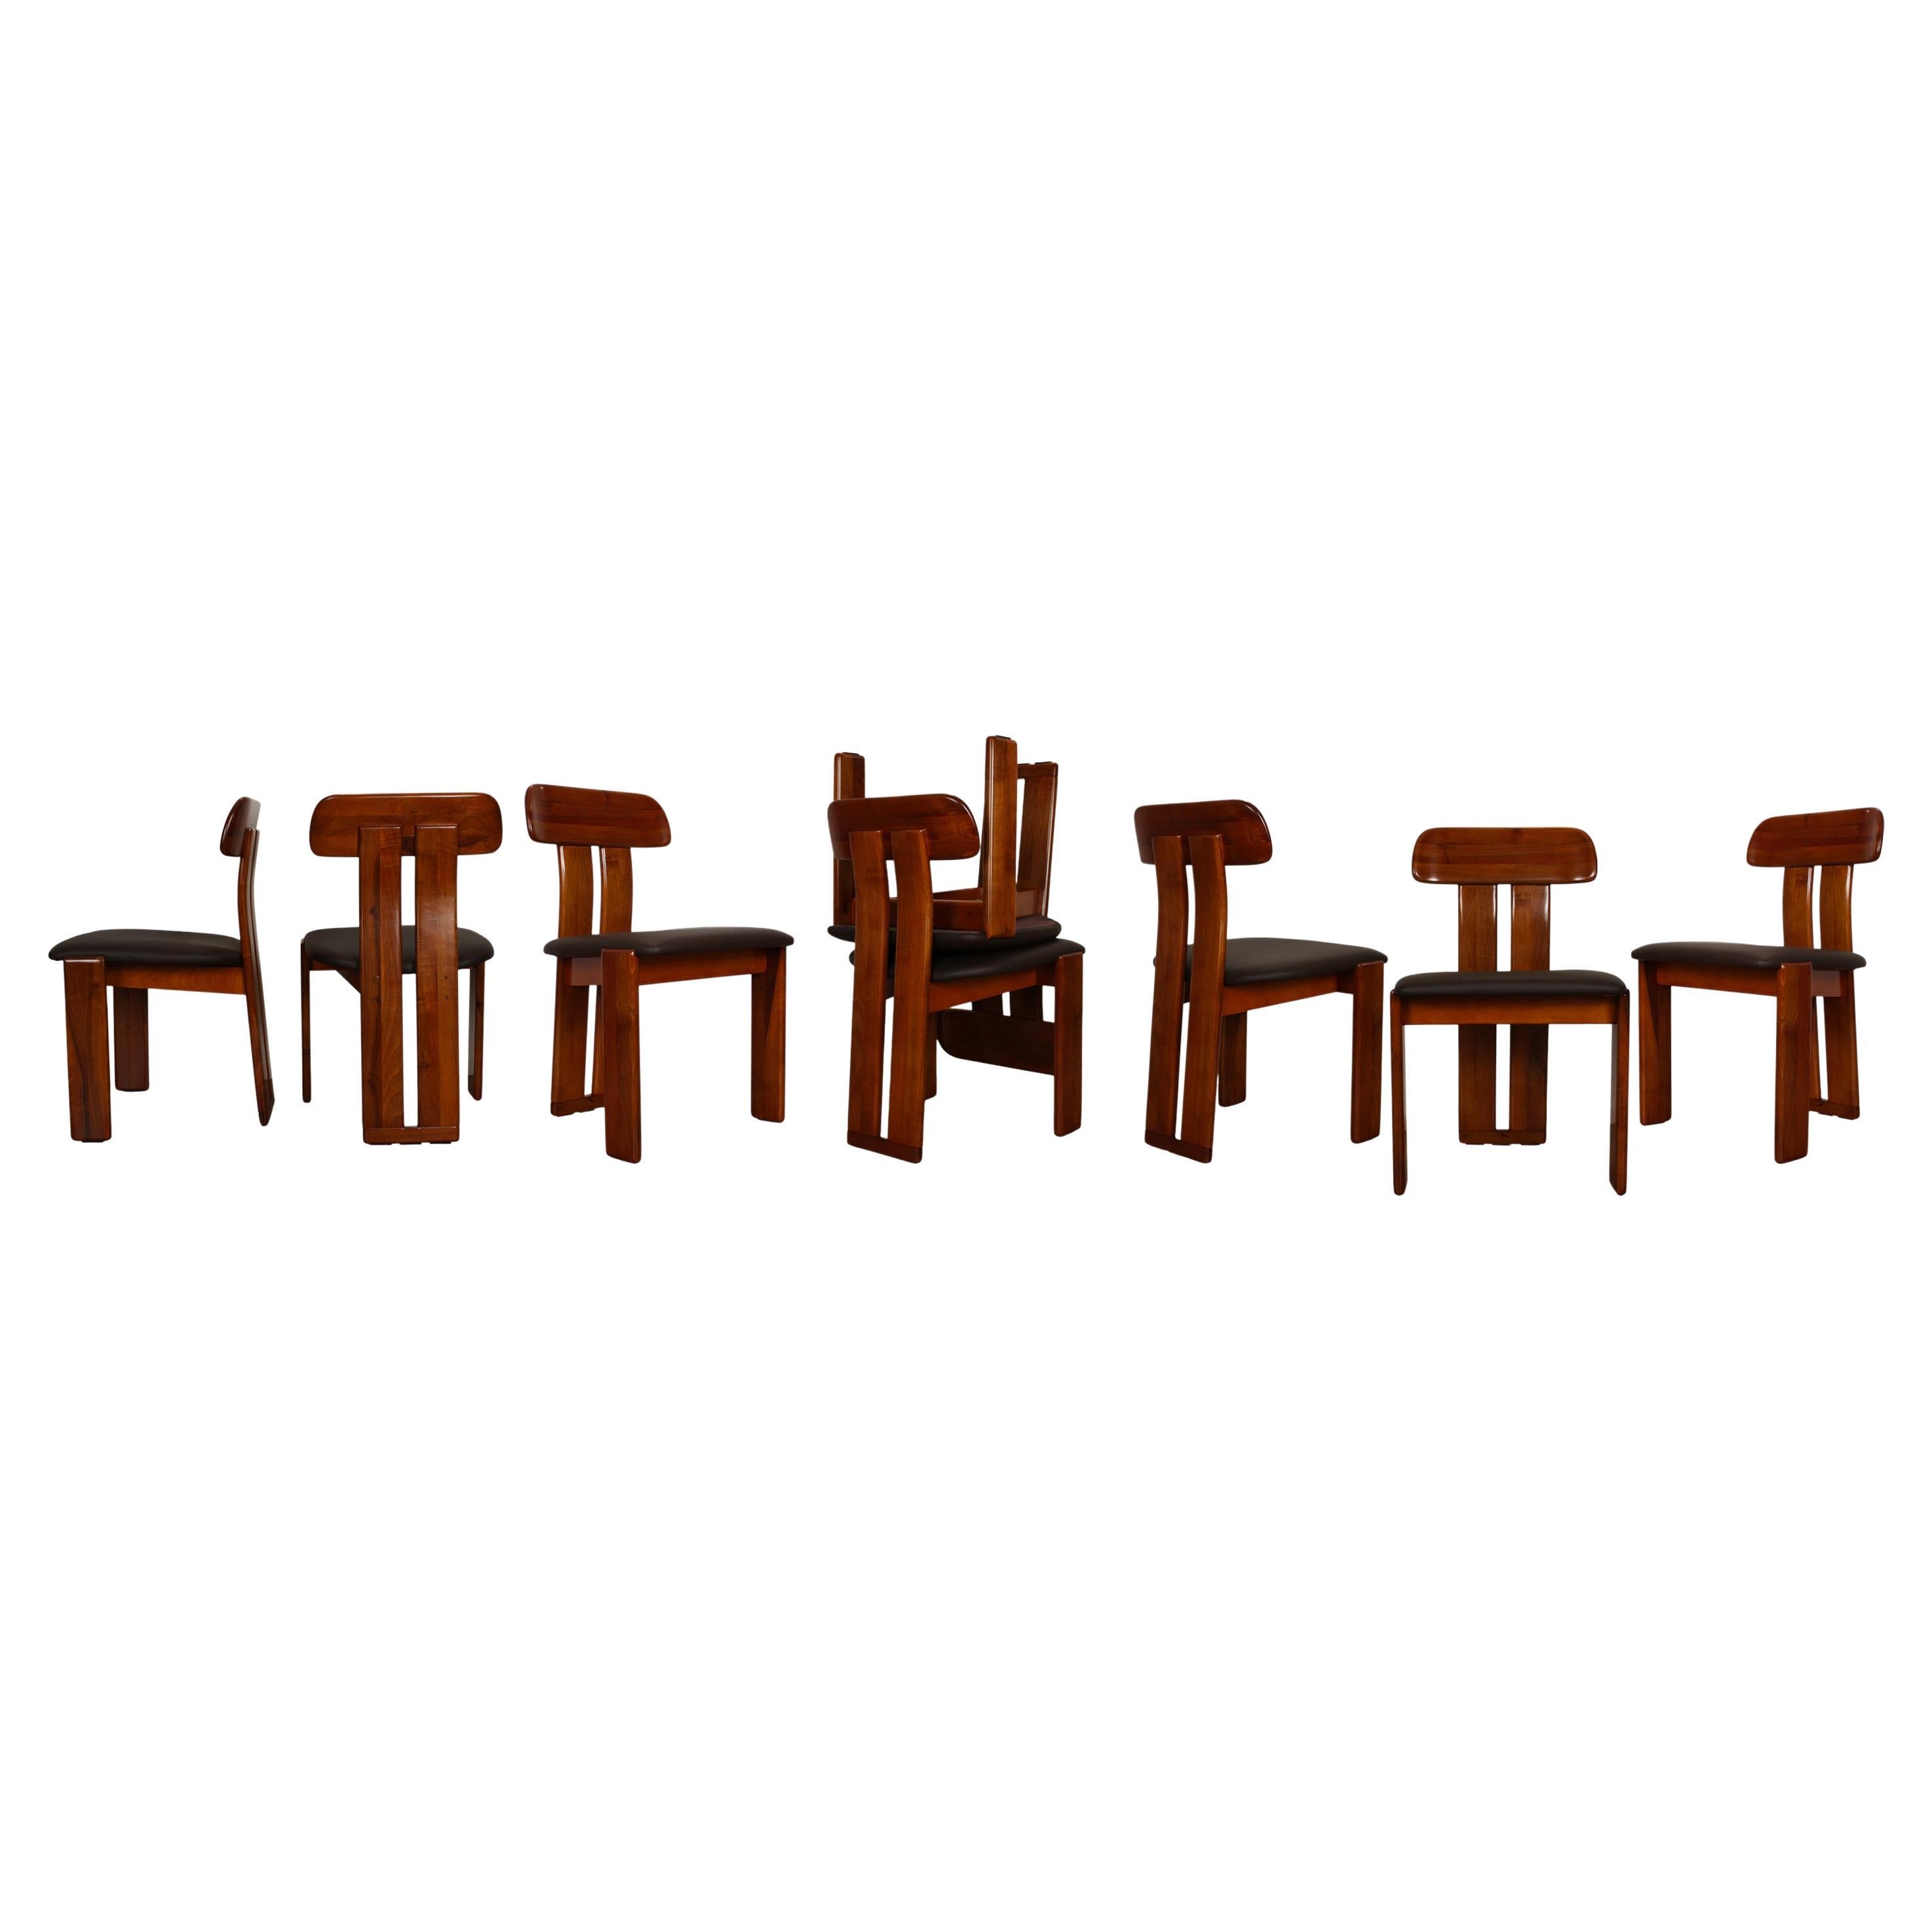 Mario Marenco Chairs